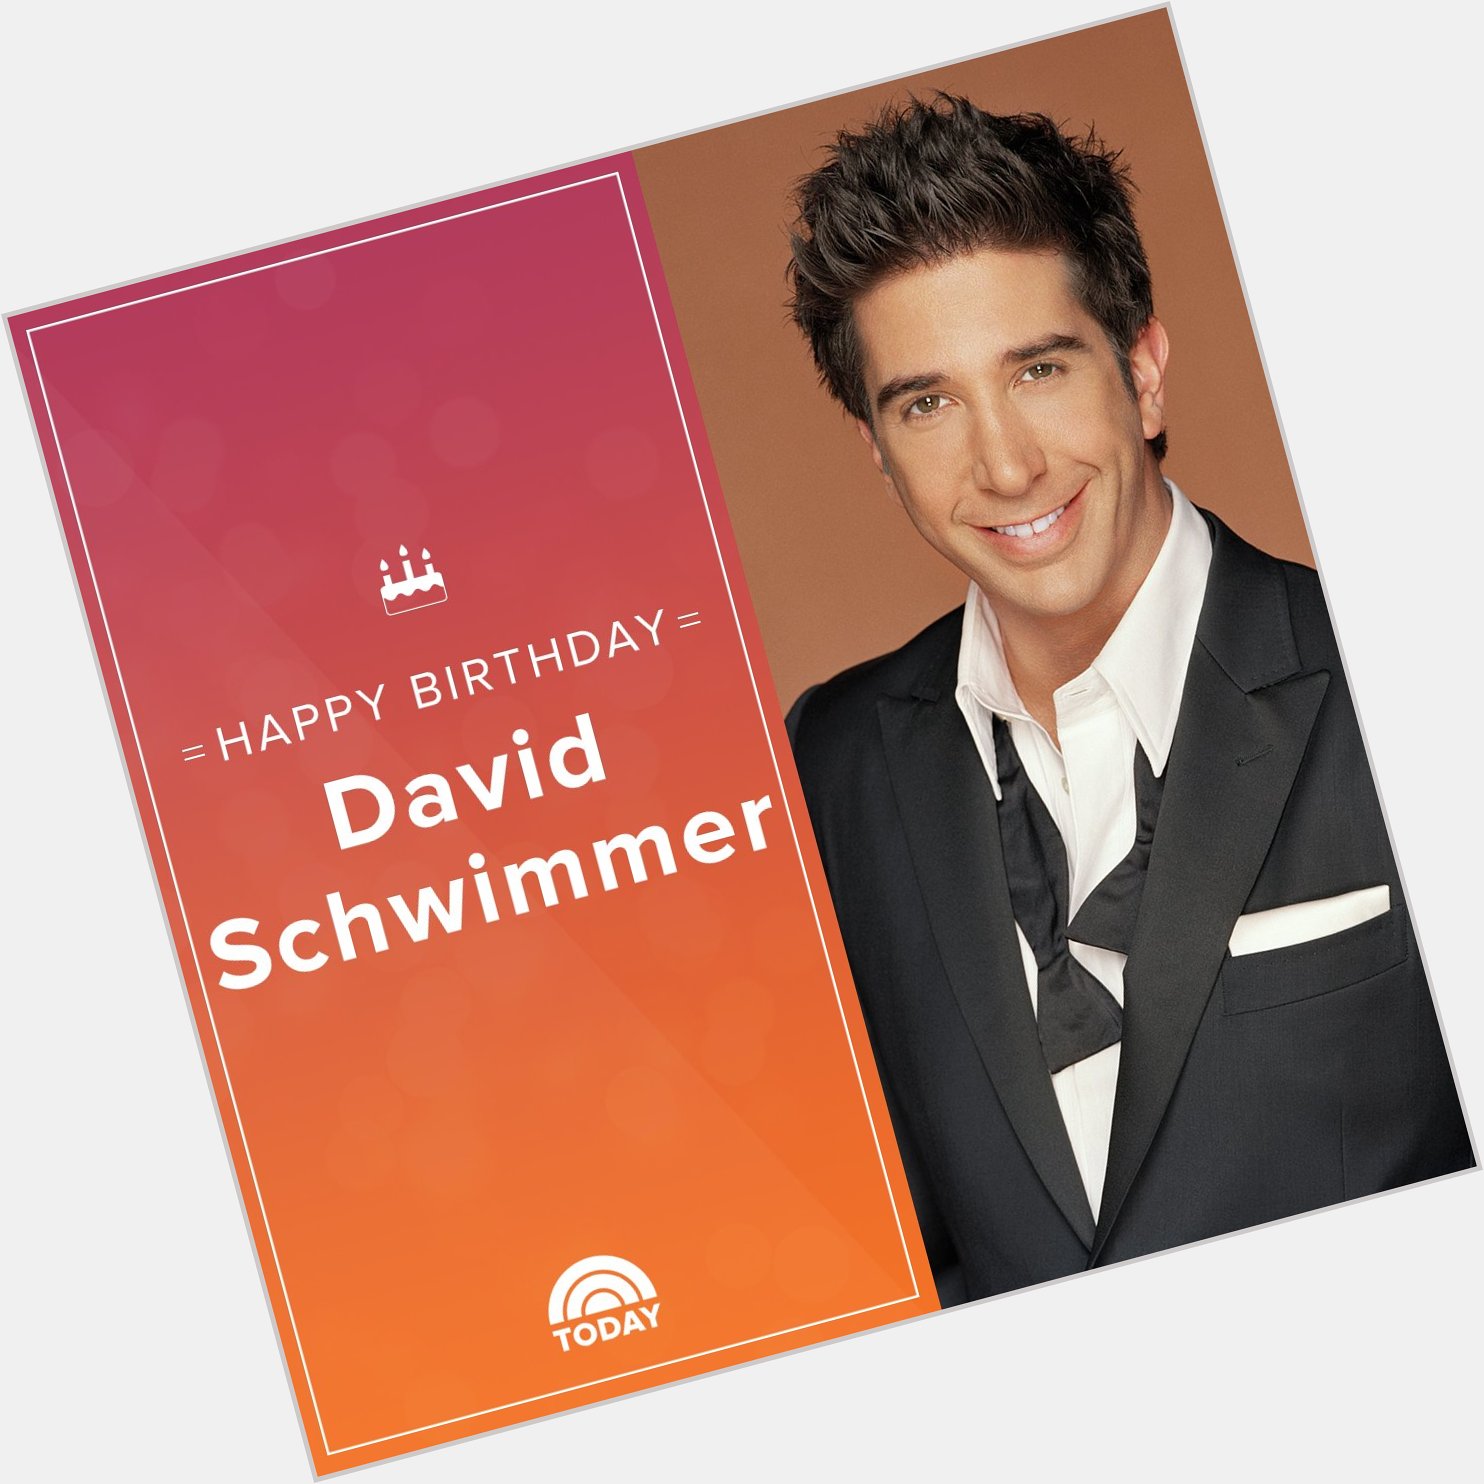 Happy birthday, David Schwimmer! 